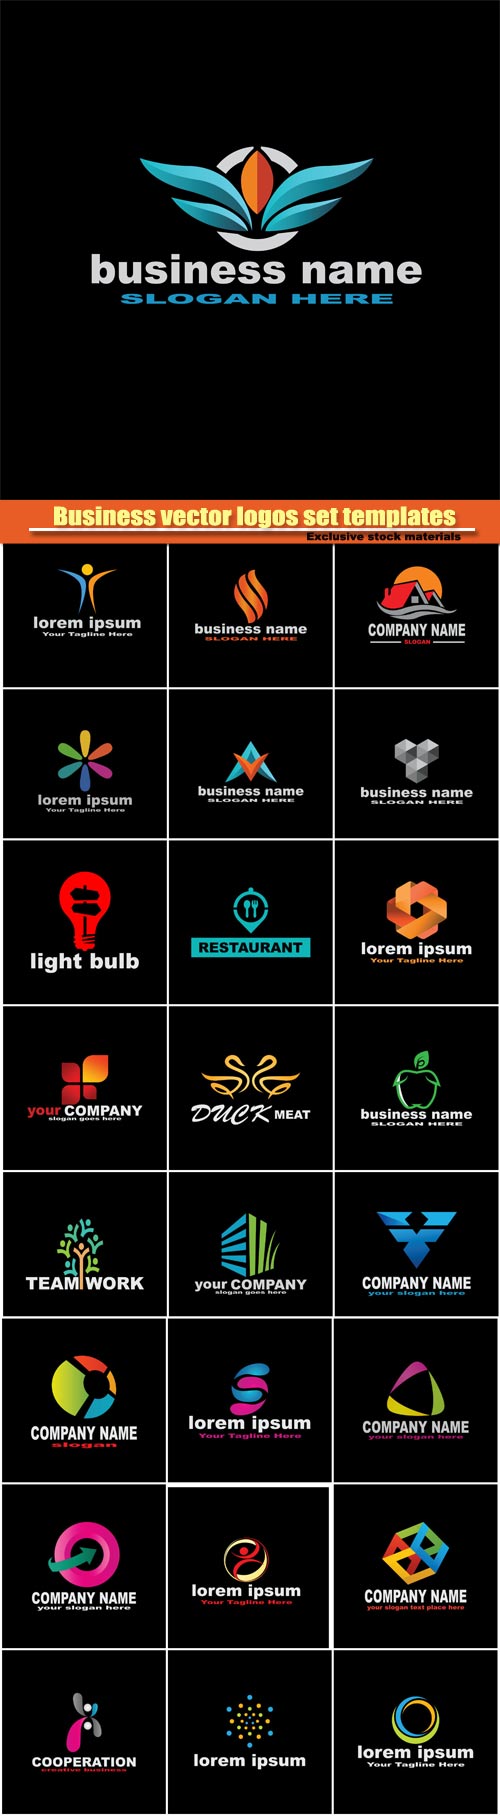 Business vector logos set templates